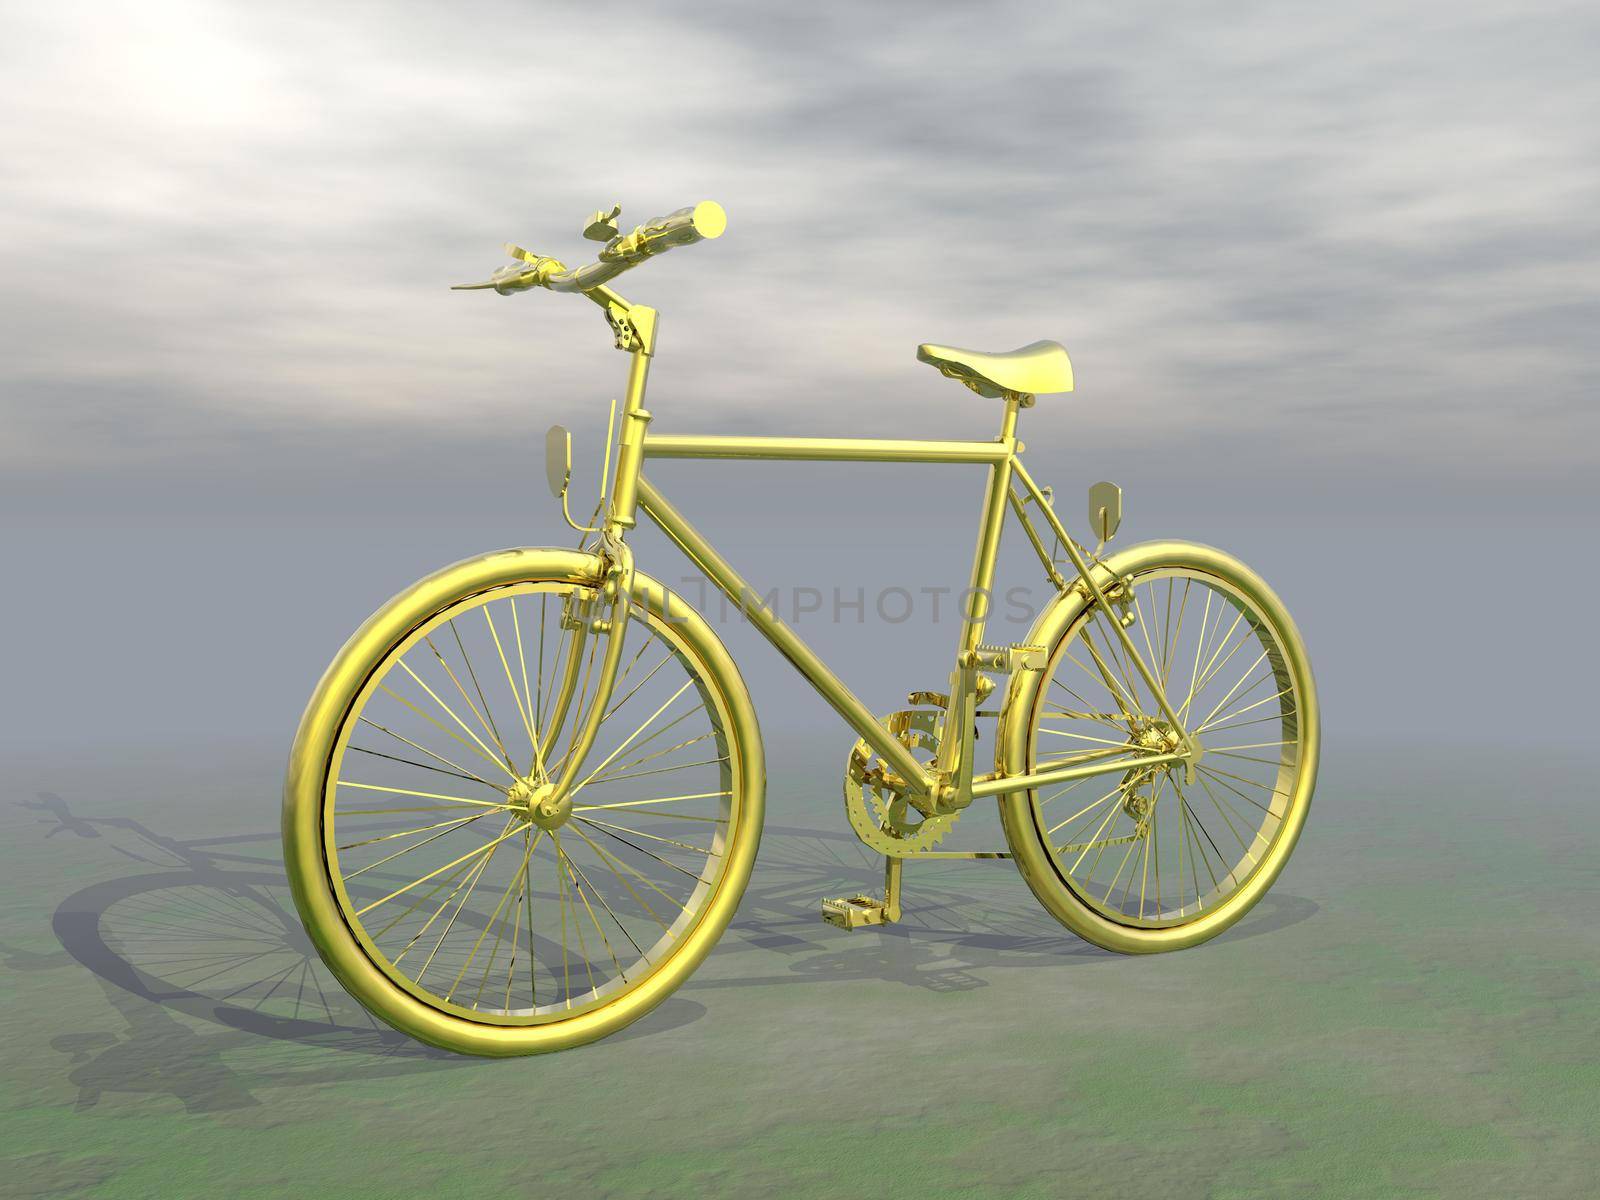 Golden mountain bike in grey cloudy background